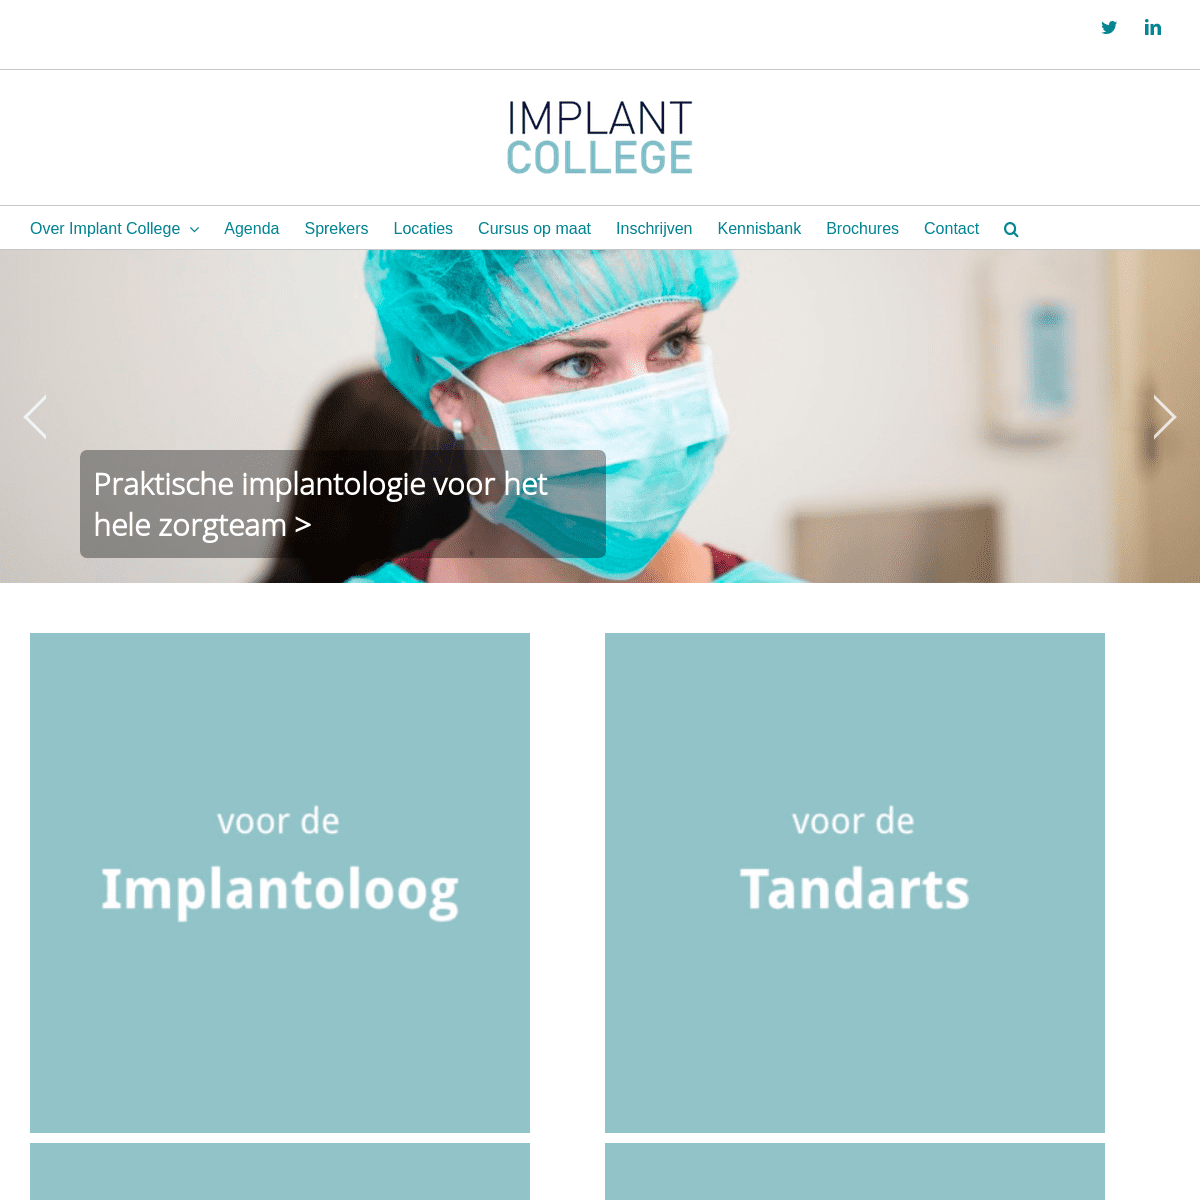 Implant College – cursussen en lezingen over implantologie